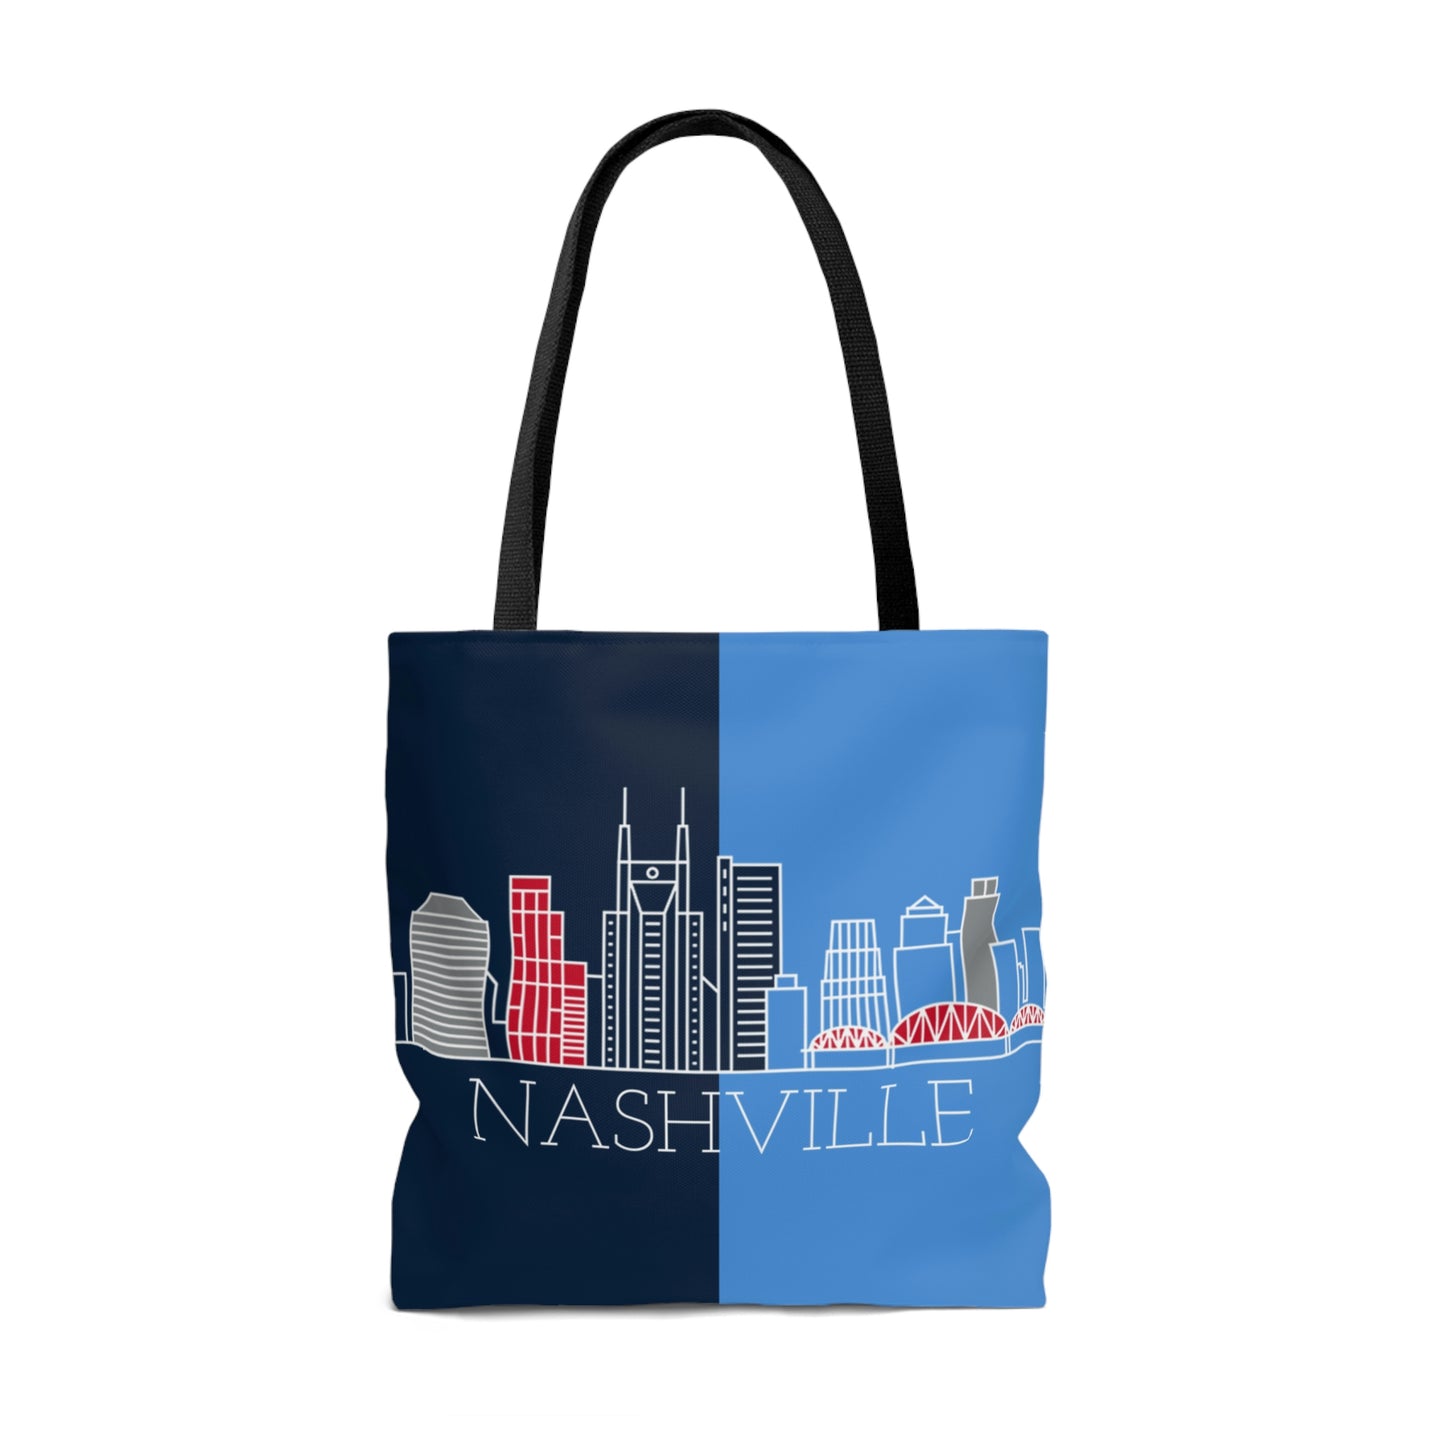 Nashville - City series  - Tote Bag